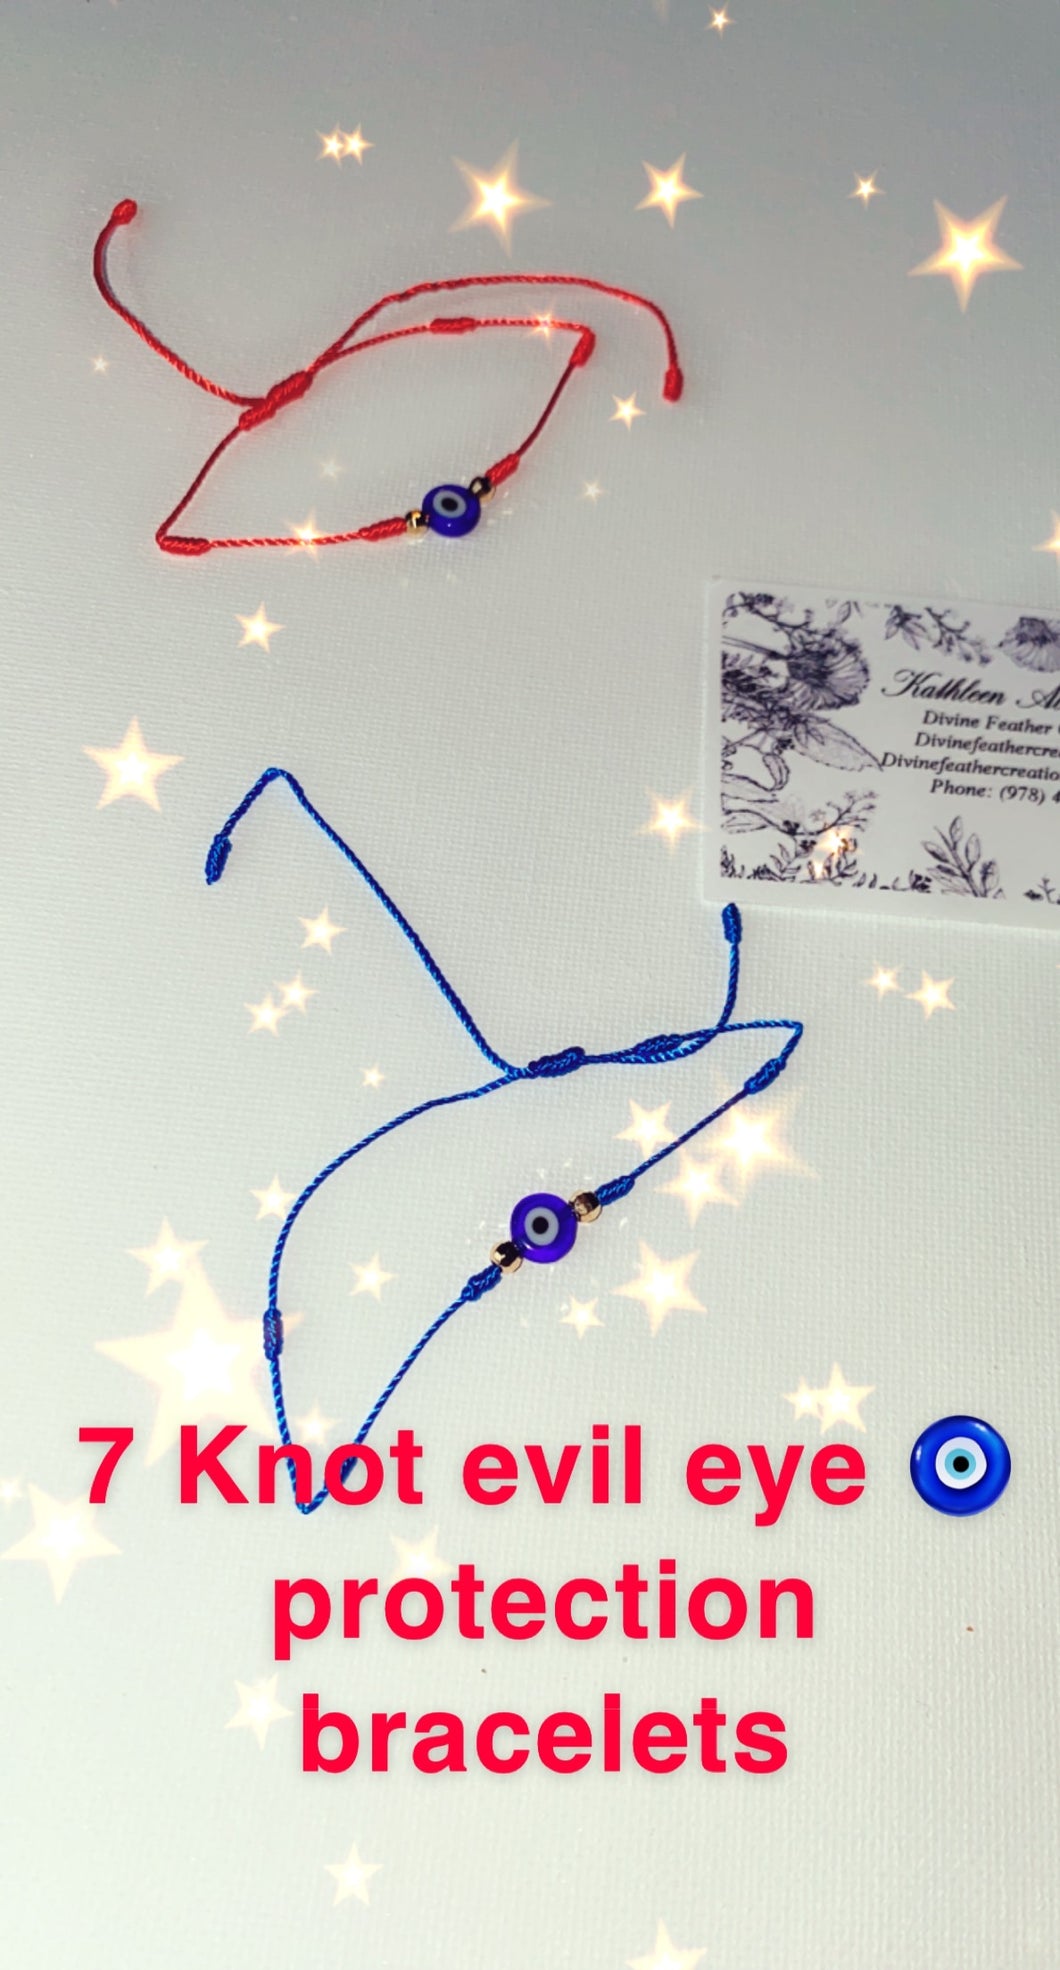 7 Knot evil eye protection